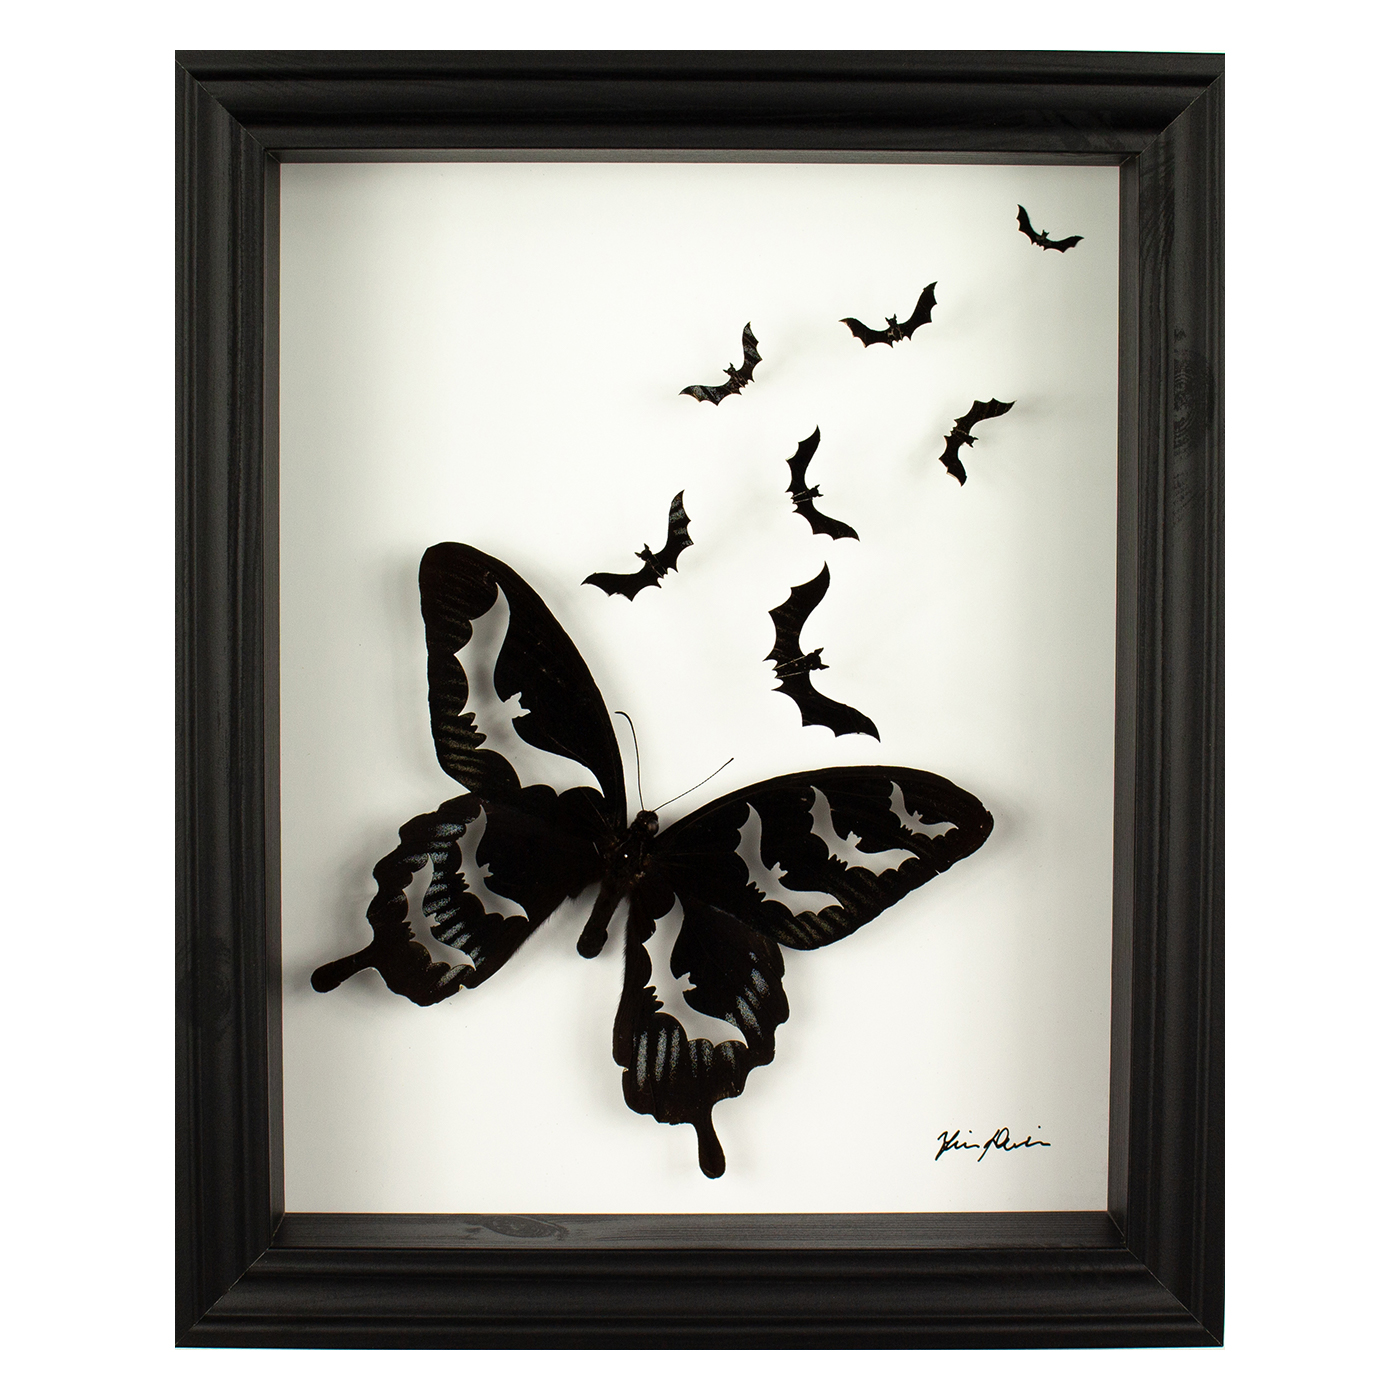 Metamorphosis taxidermy artwork, real butterfly cut into bats